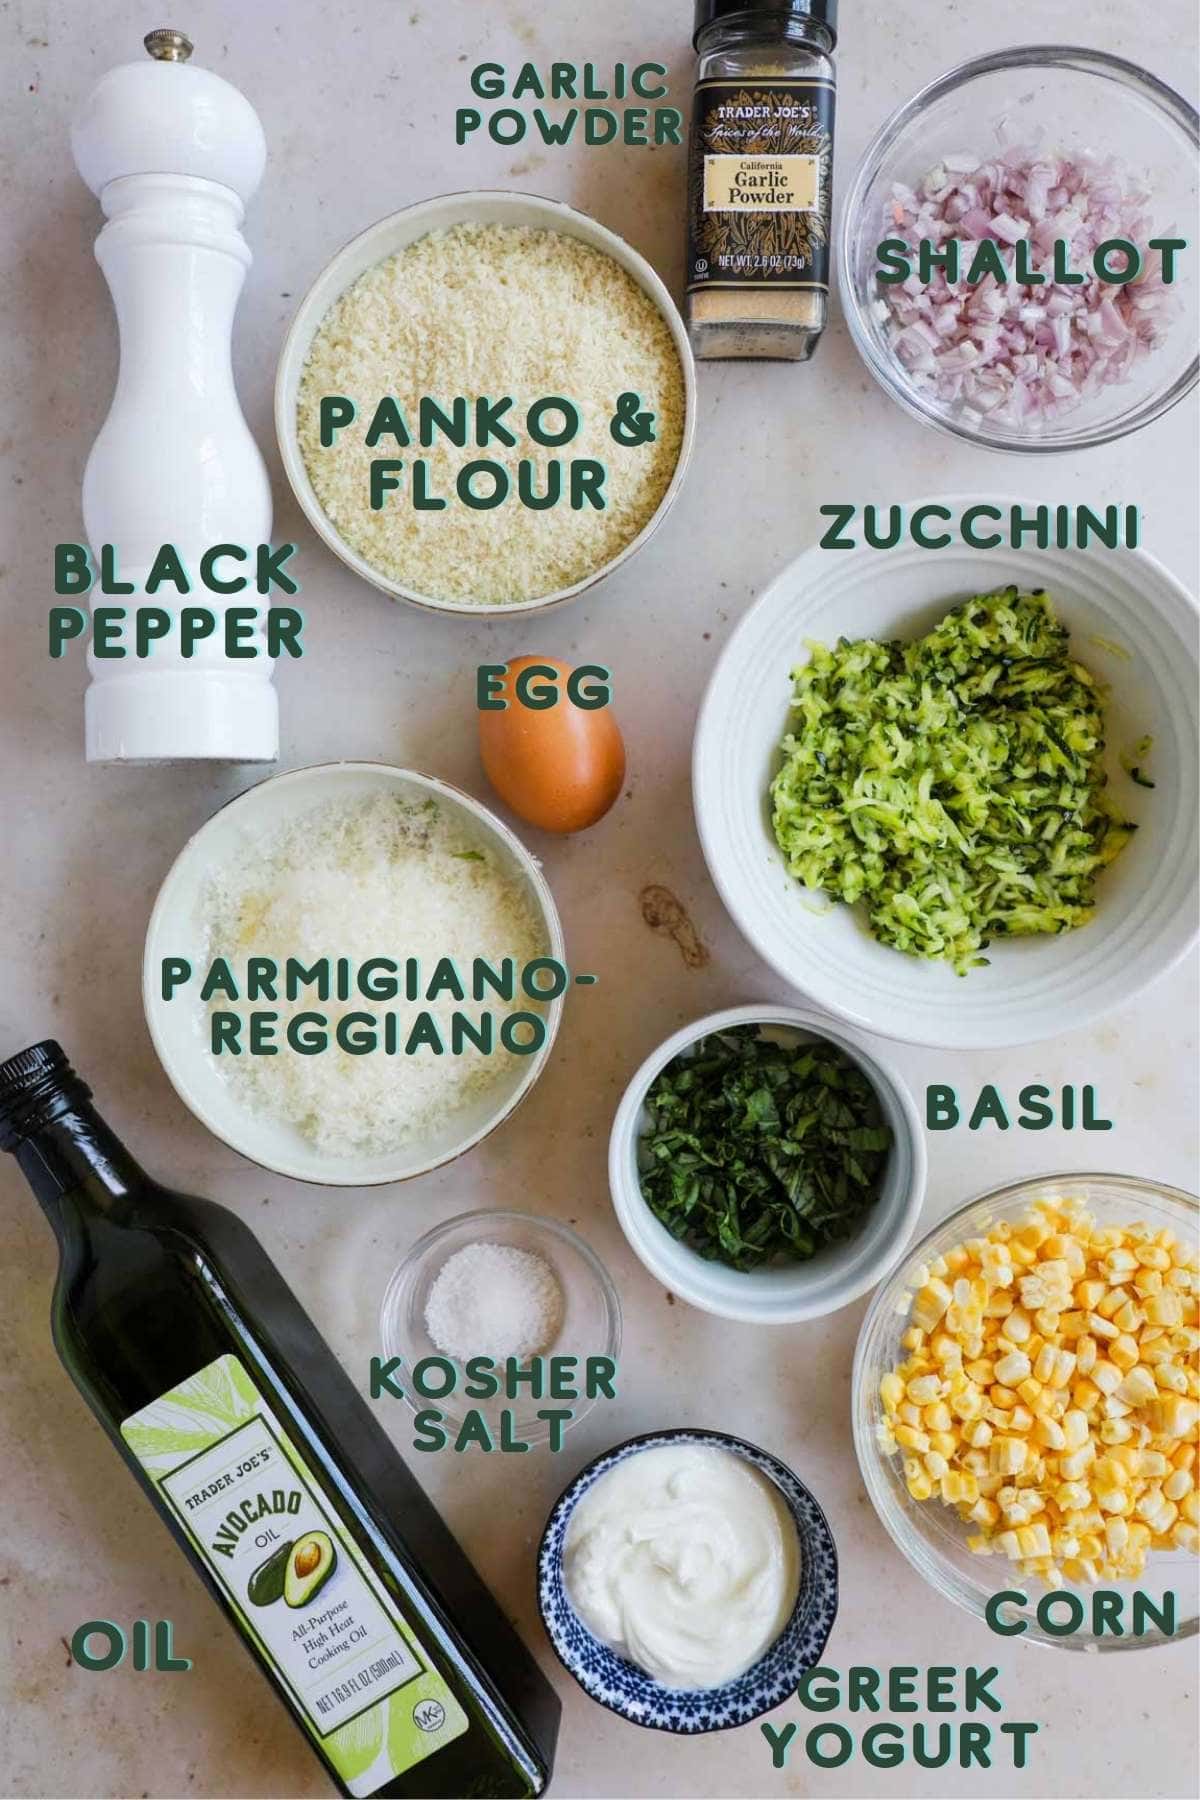 Ingredients to make corn and zucchini fritters, including grated zucchini, corn, parmigiano-reggiano, panko, flour, egg, garlic powder, shallot, basil, salt, avocado oil, greek yogurt, and black pepper.